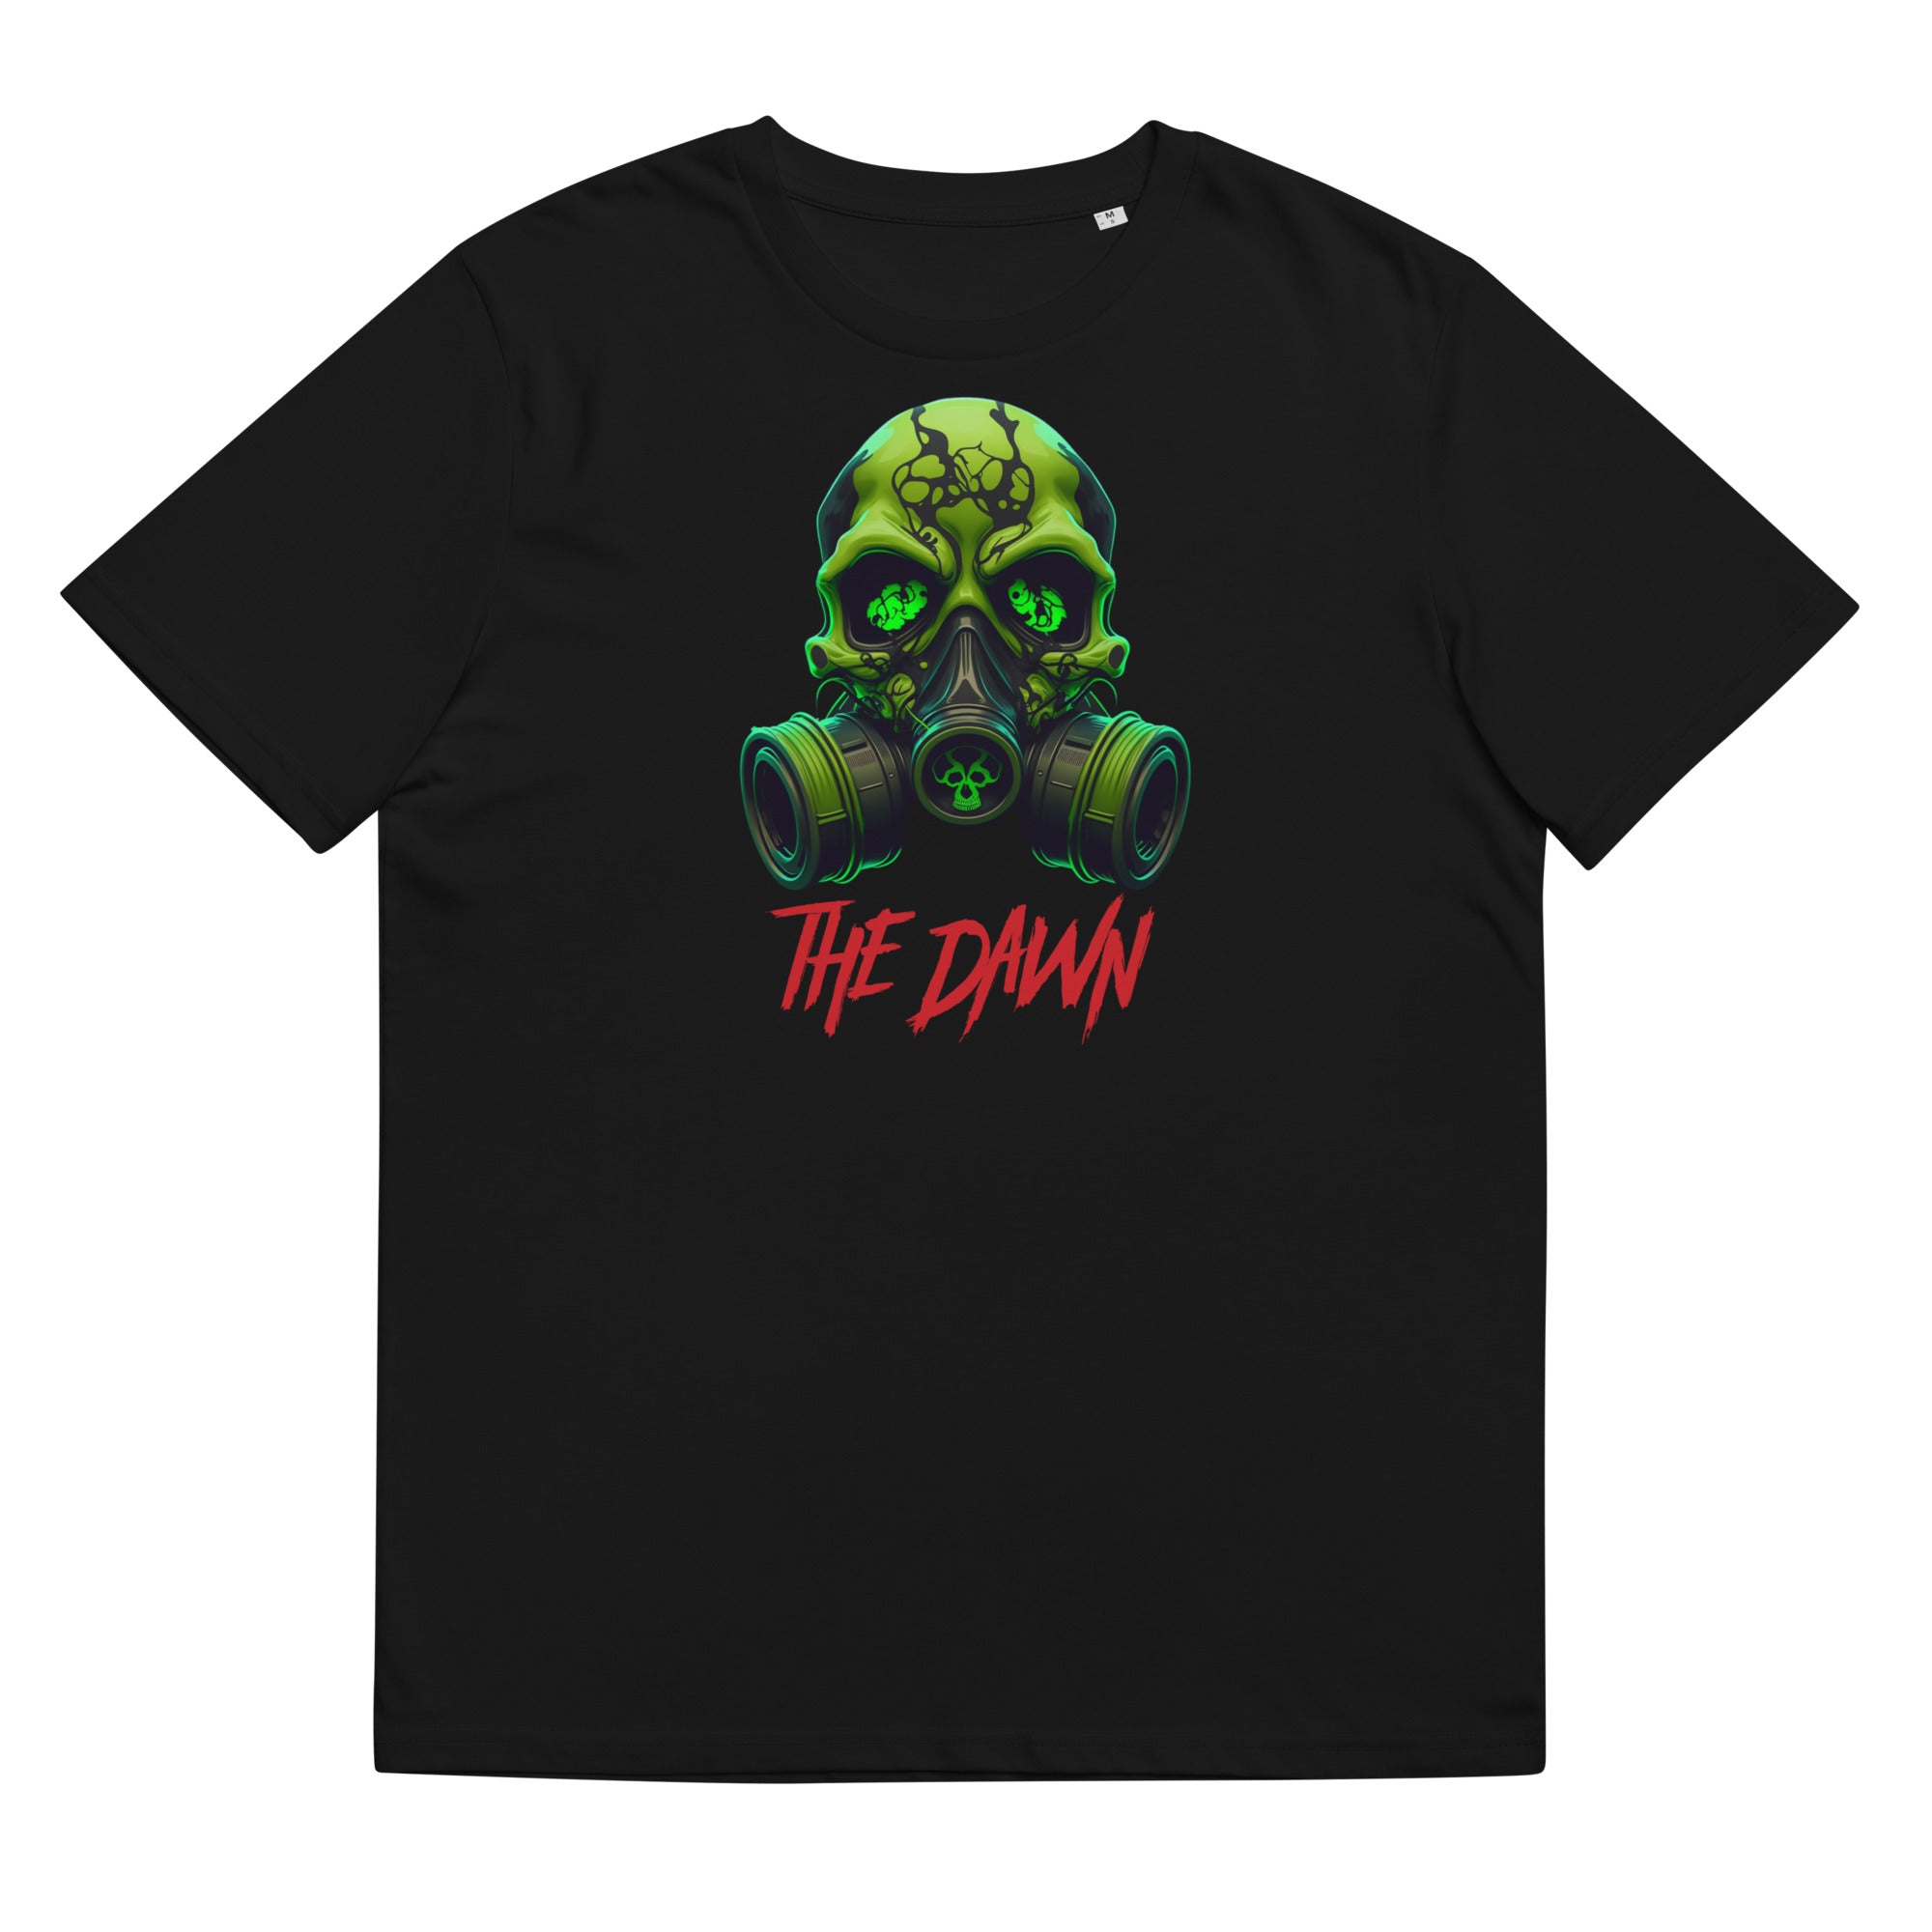 The Dawn - Organic Cotton T-shirt